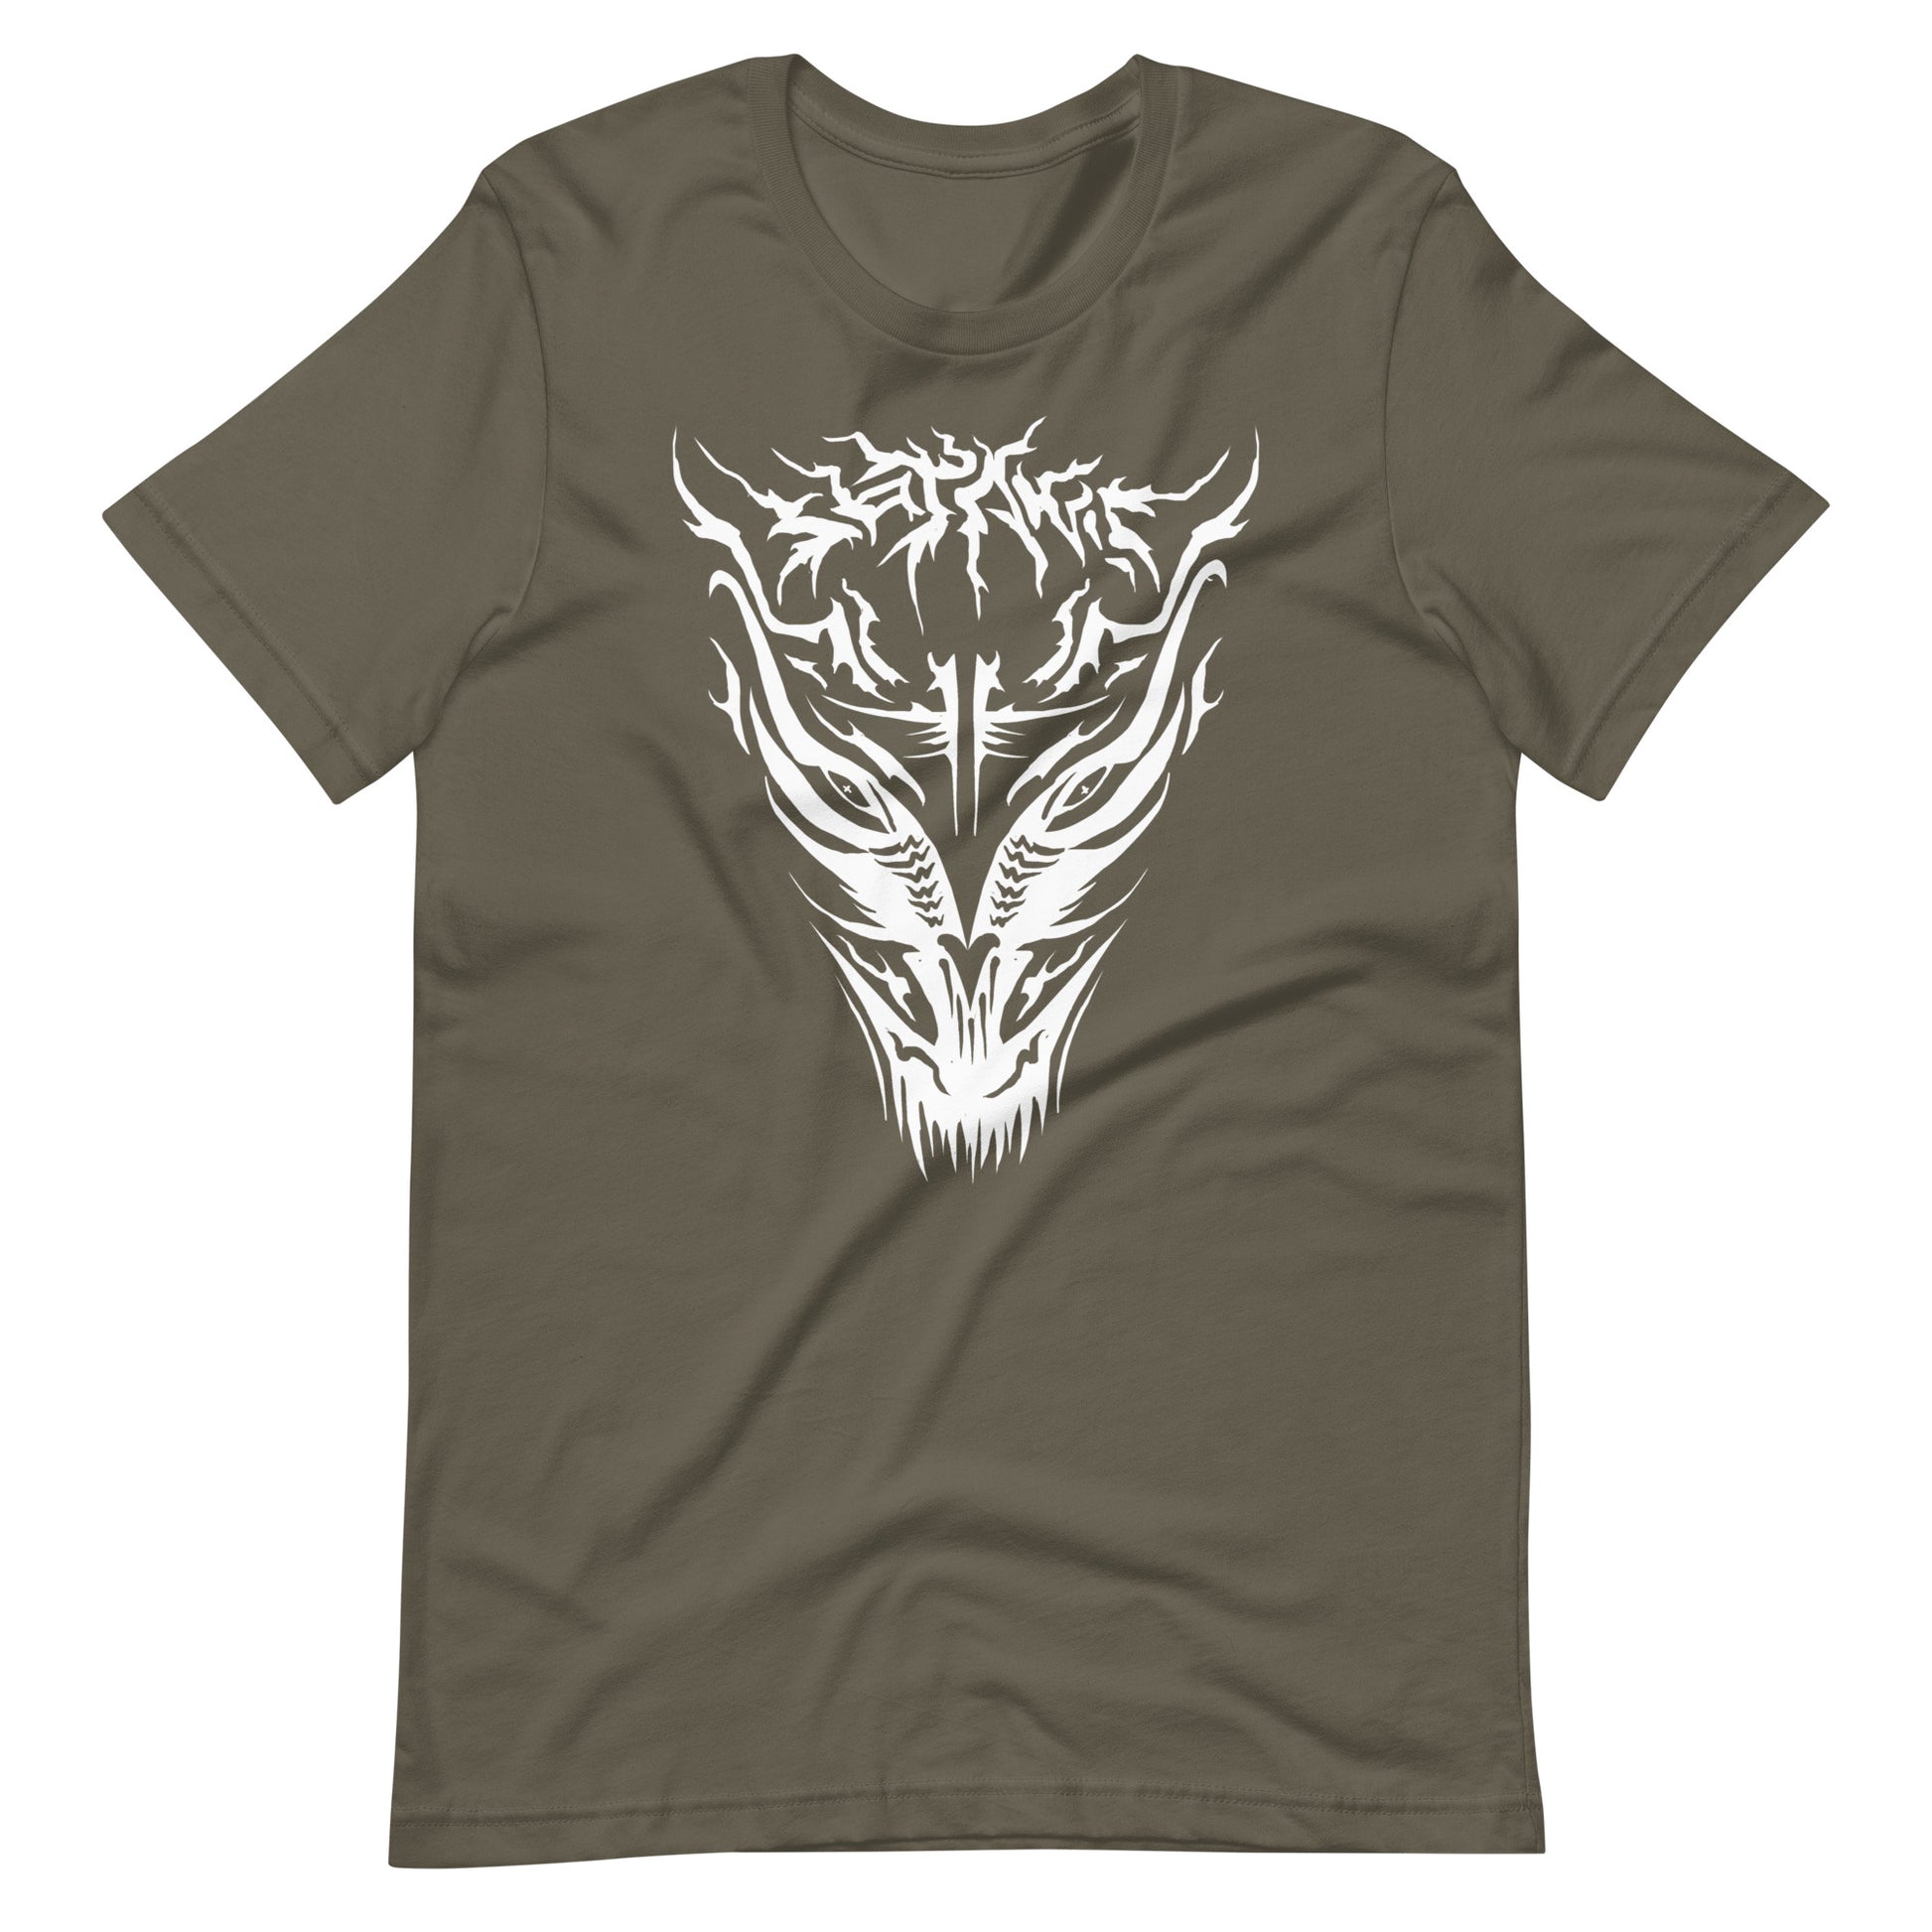 Demon - Men's t-shirt - Army Front